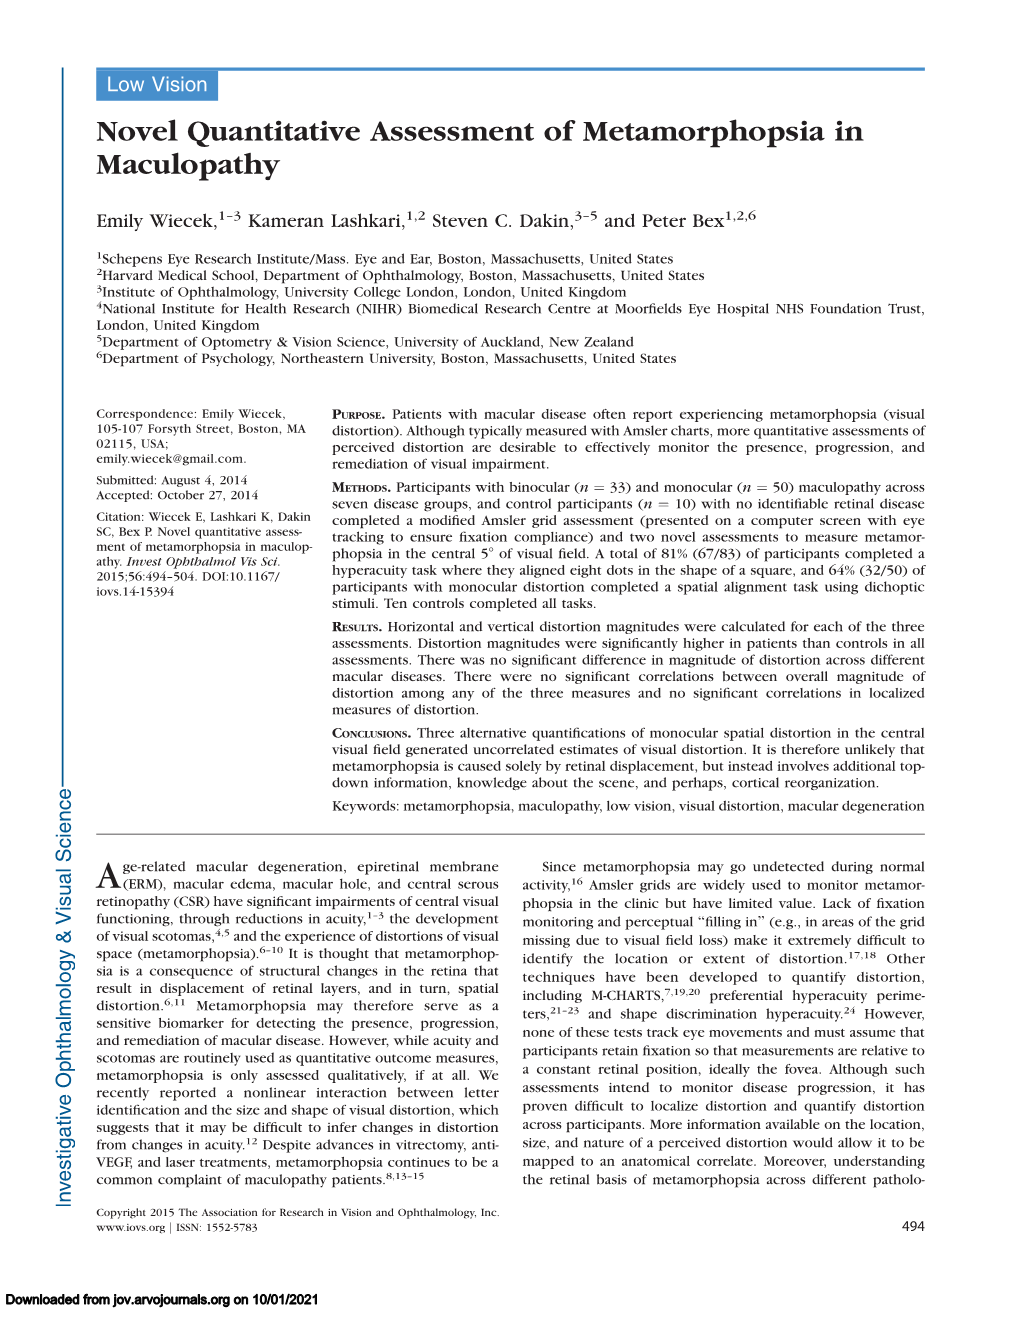 Novel Quantitative Assessment of Metamorphopsia in Maculopathy